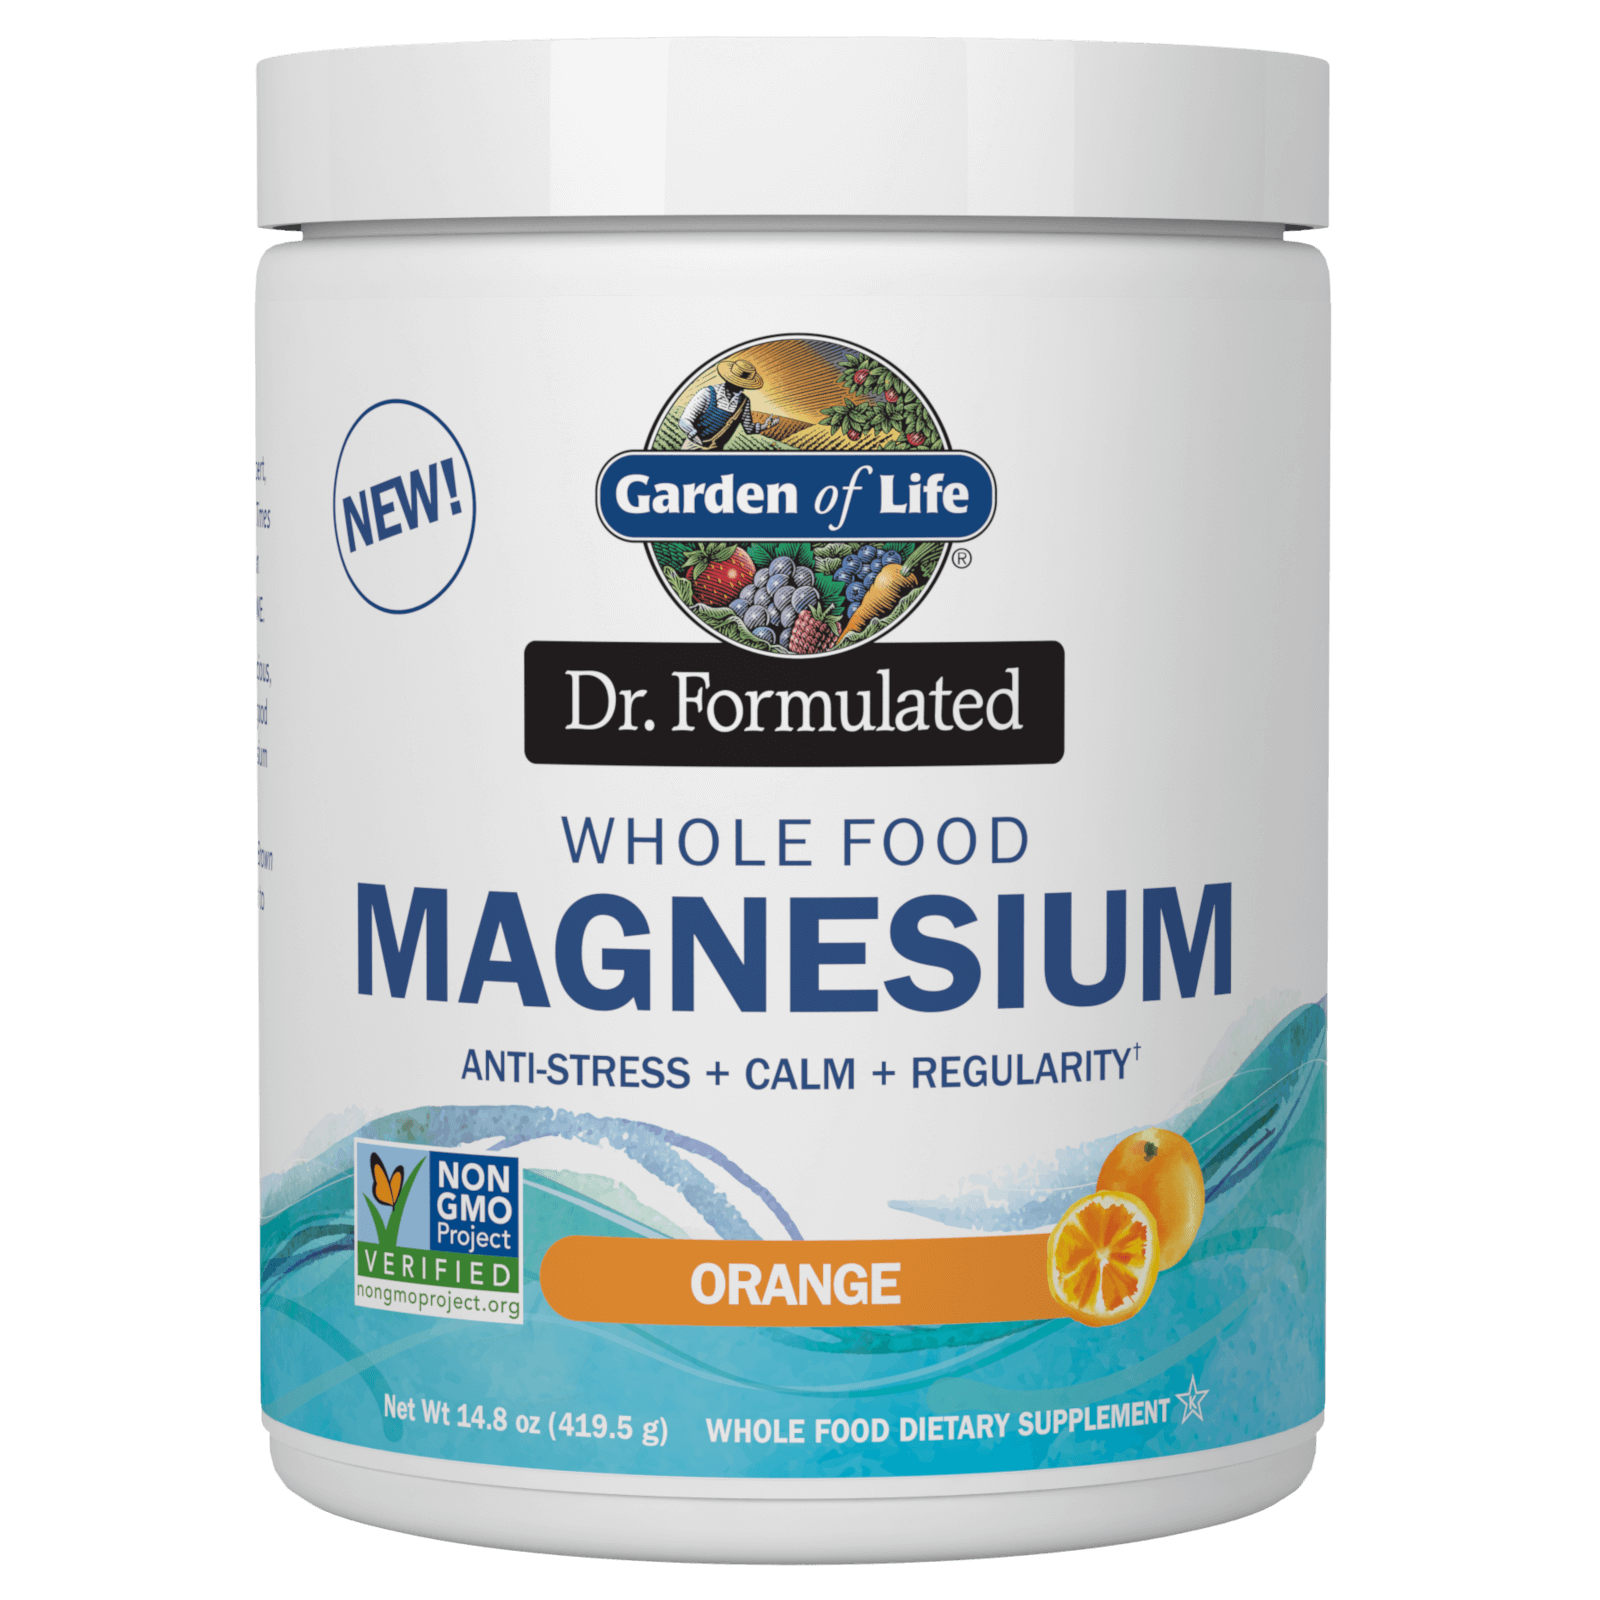 Garden of Life Magnesium Orange 419.5g Powder